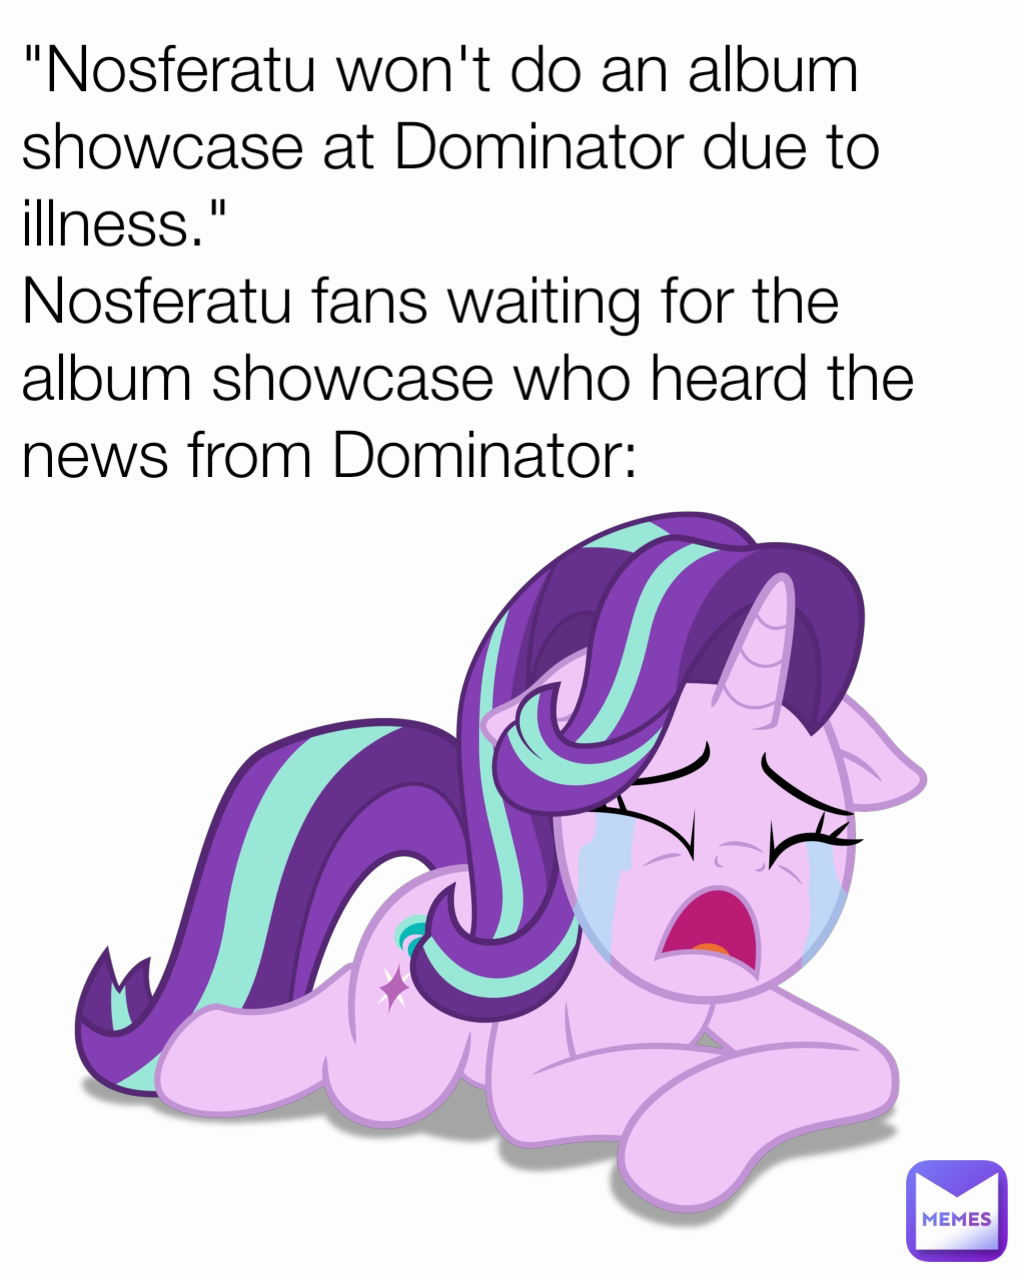 "Nosferatu won't do an album showcase at Dominator due to illness."
Nosferatu fans waiting for the album showcase who heard the news from Dominator: